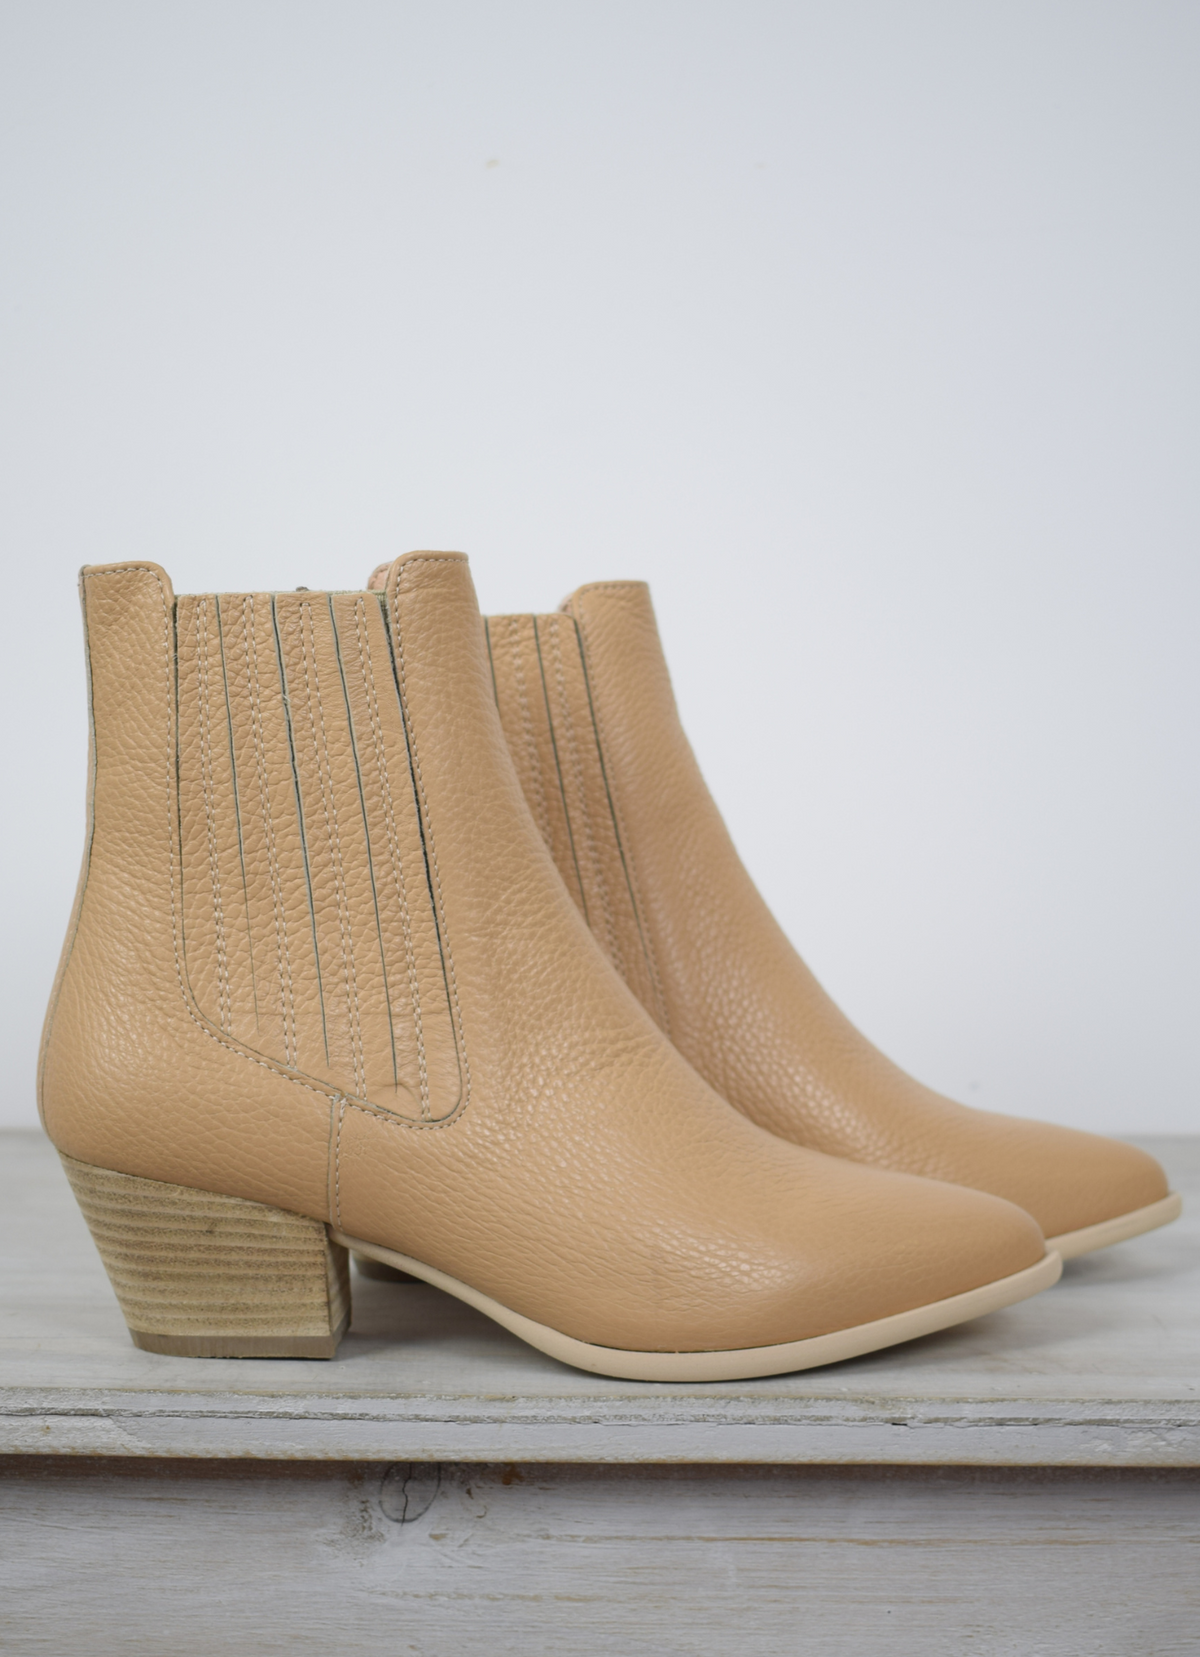 Caramel boot with block heel